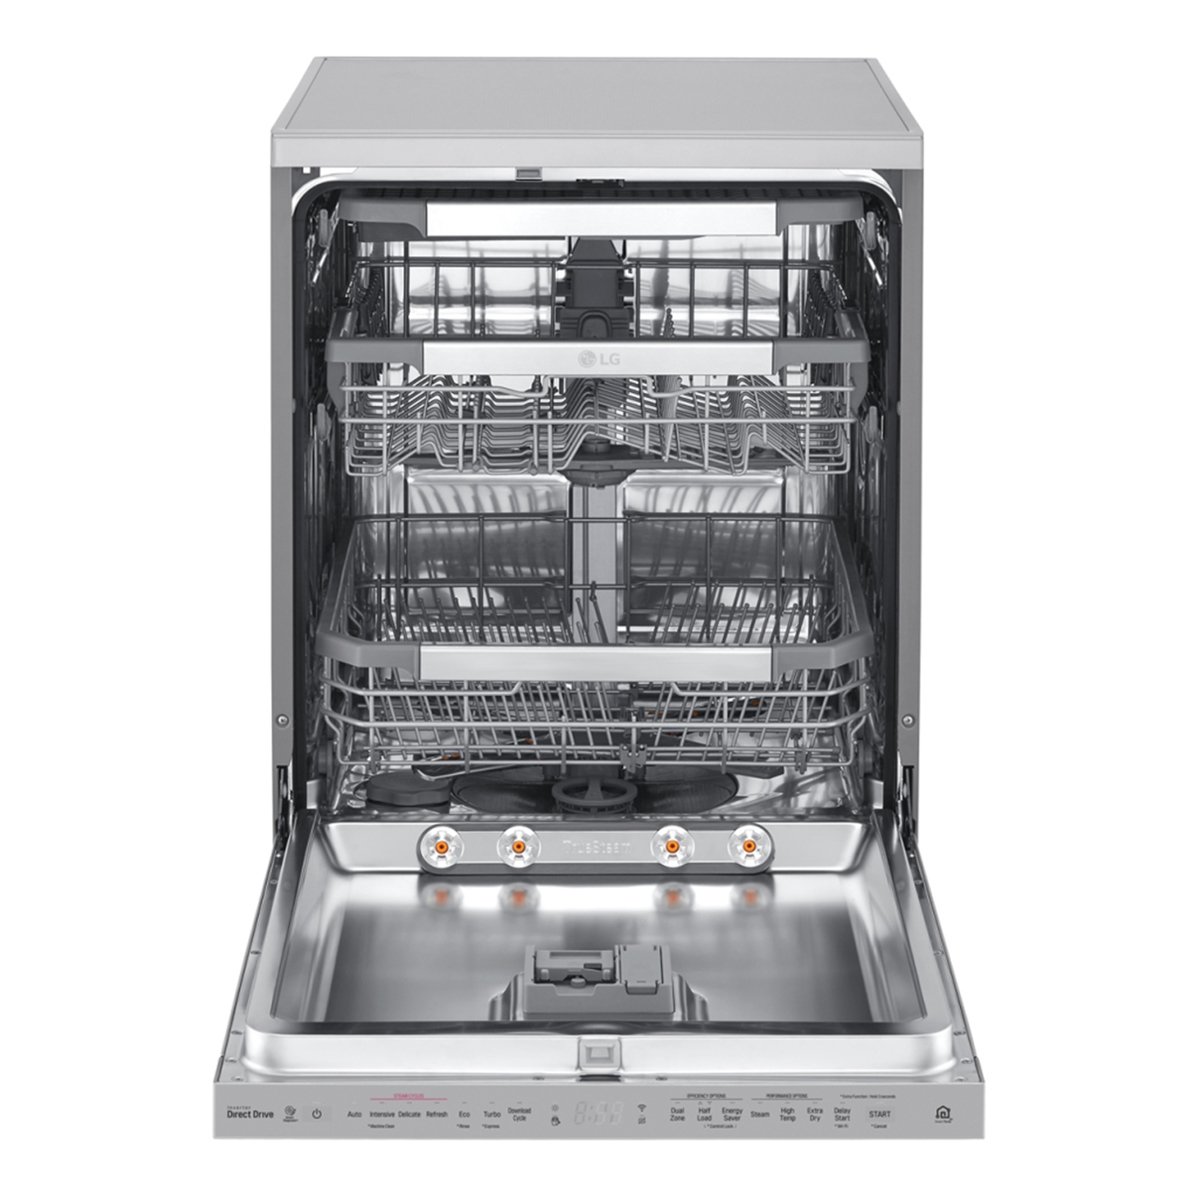 LG QuadWash Steam Dishwasher DFB325HS 8Programs